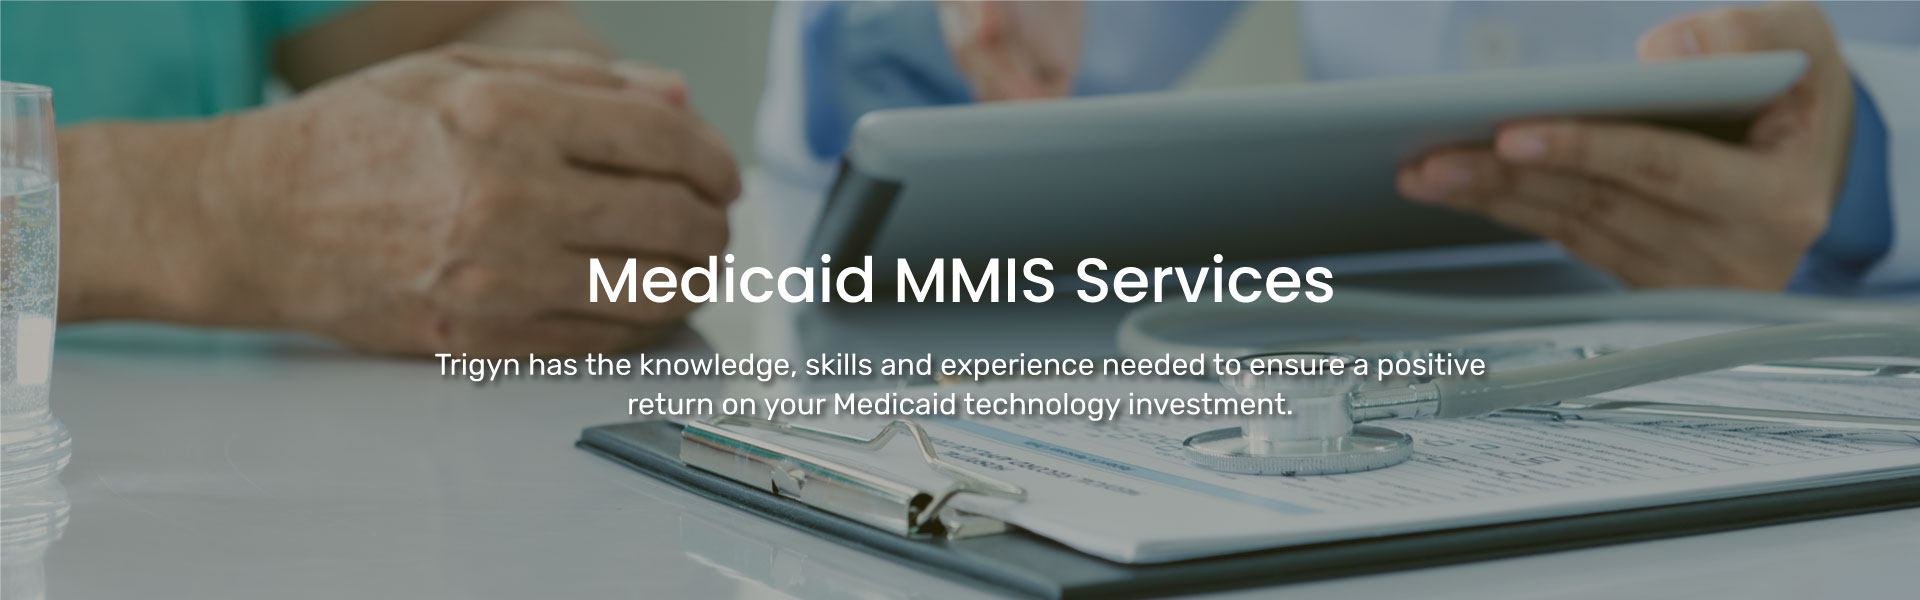 Trigyn's Medicaid MMIS Services